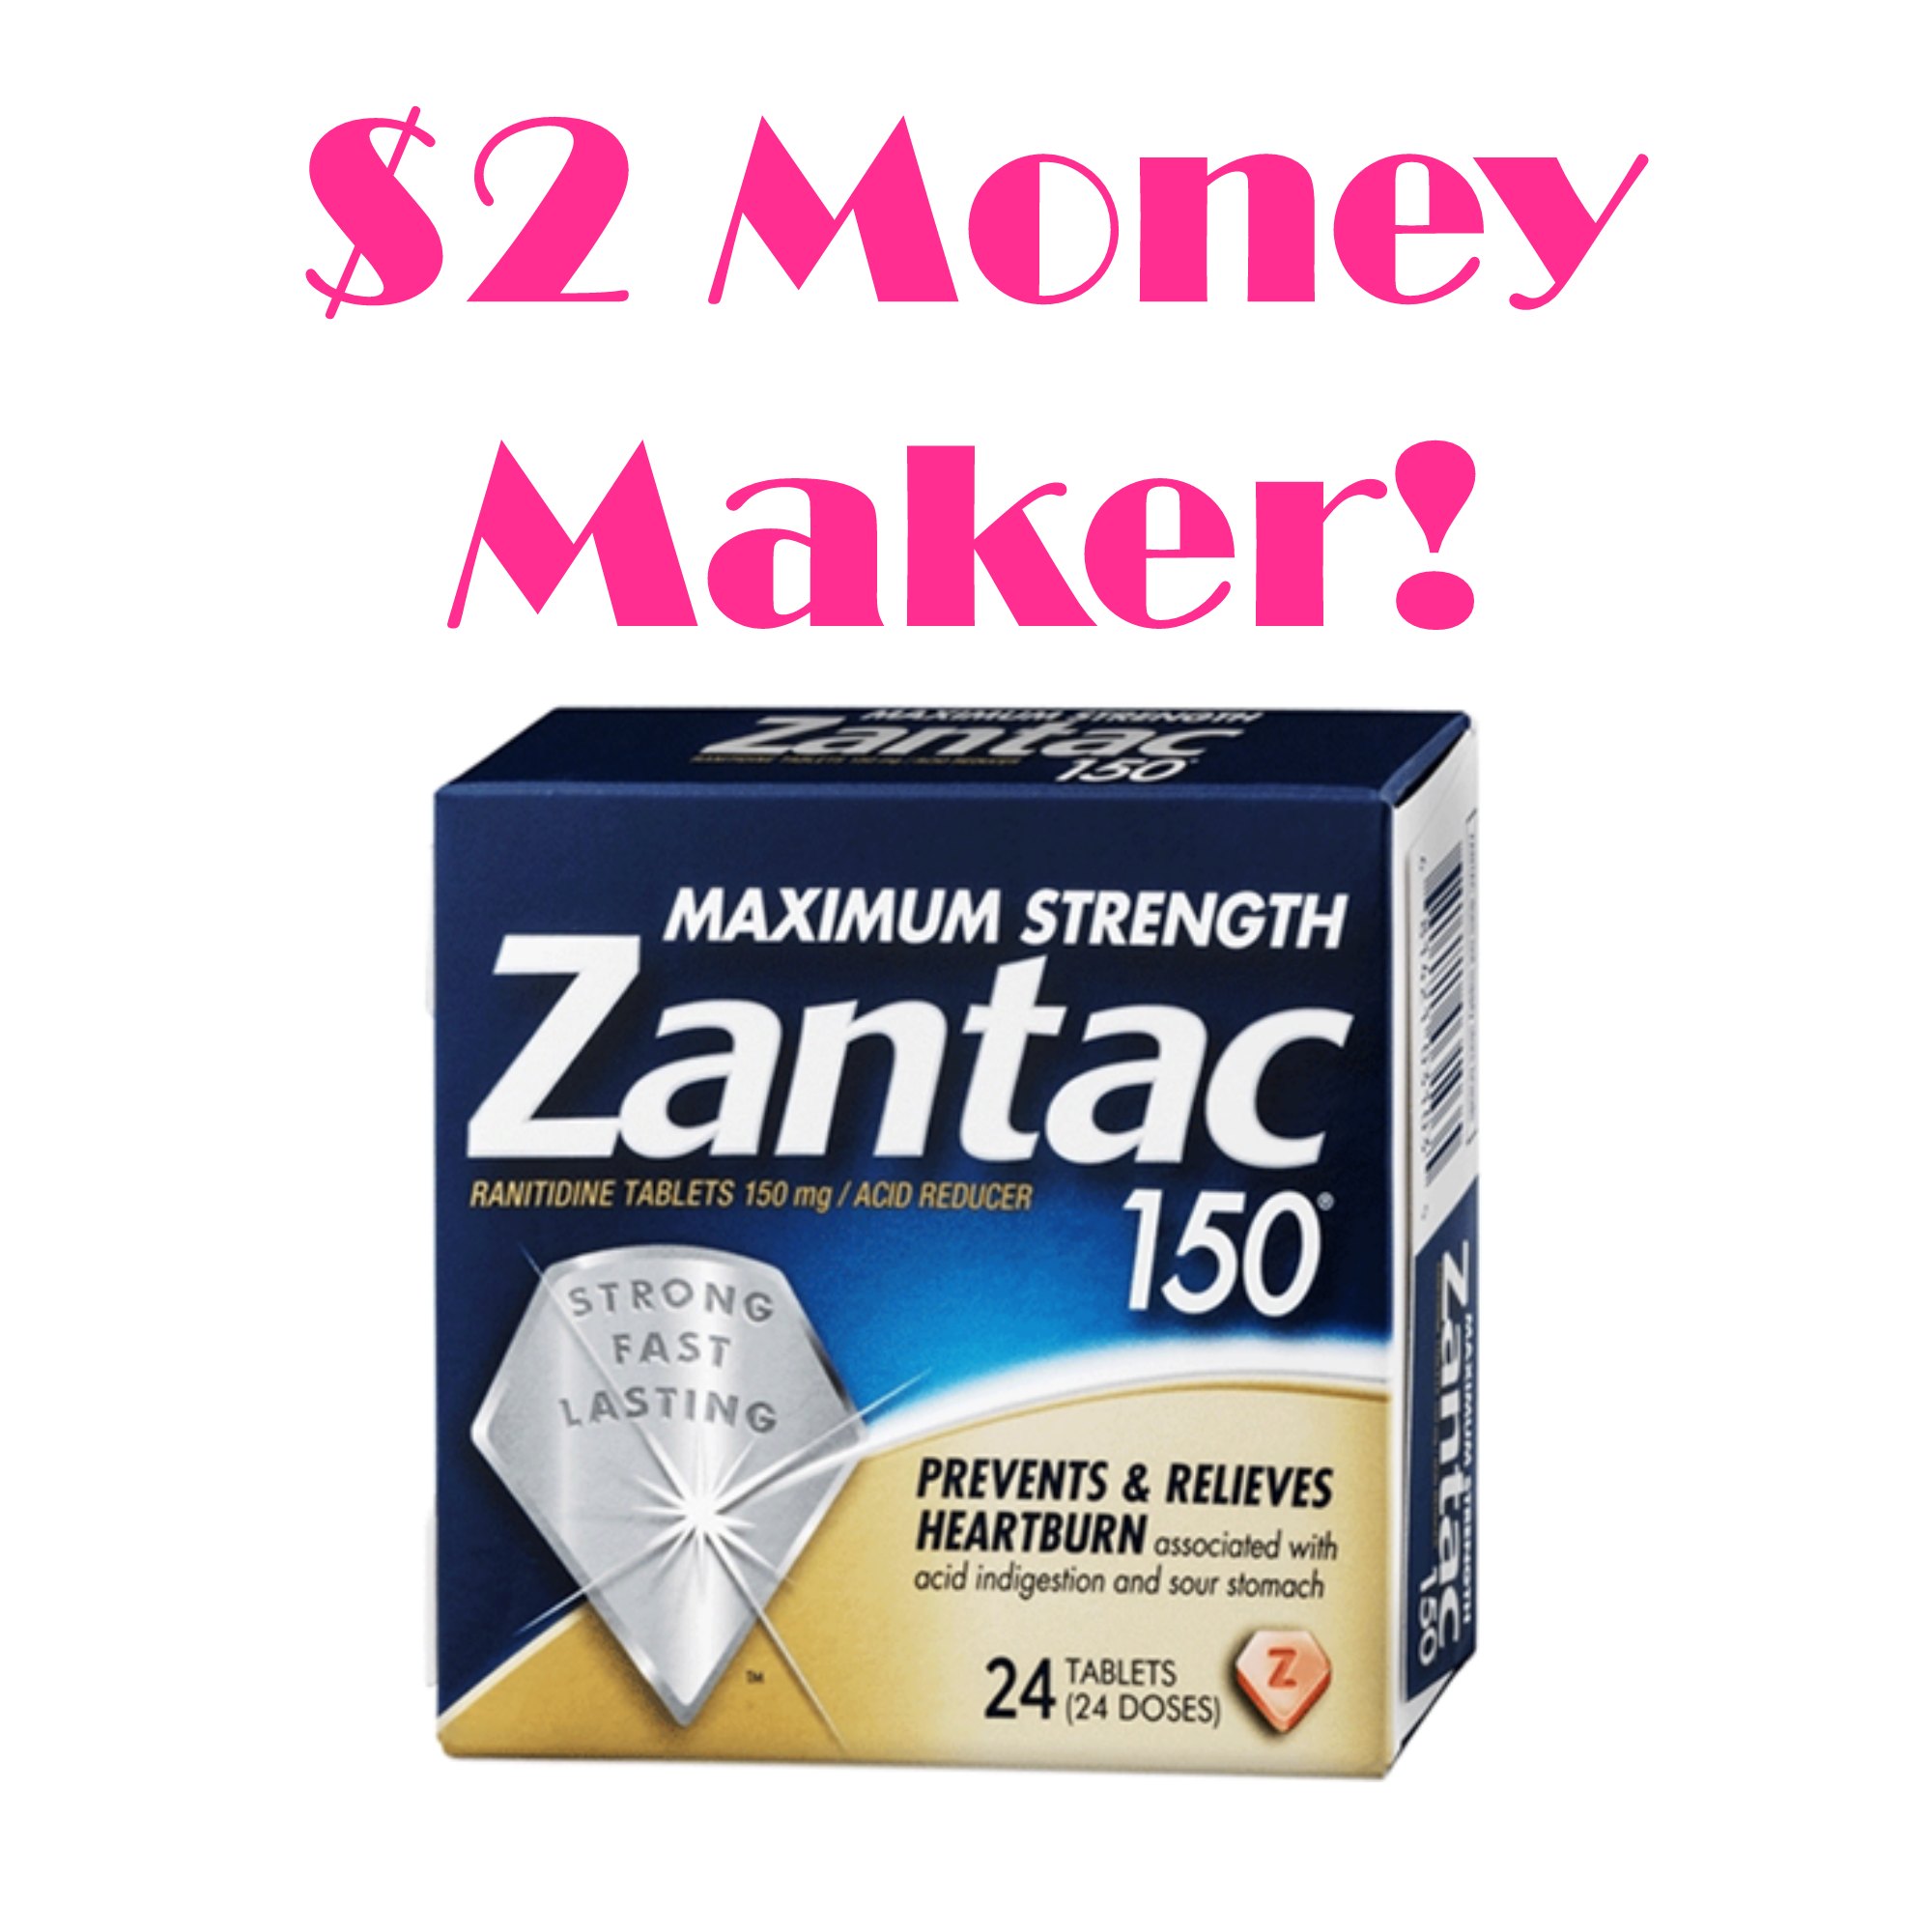 $2.00 Money Maker On Zantac At Rite Aid!